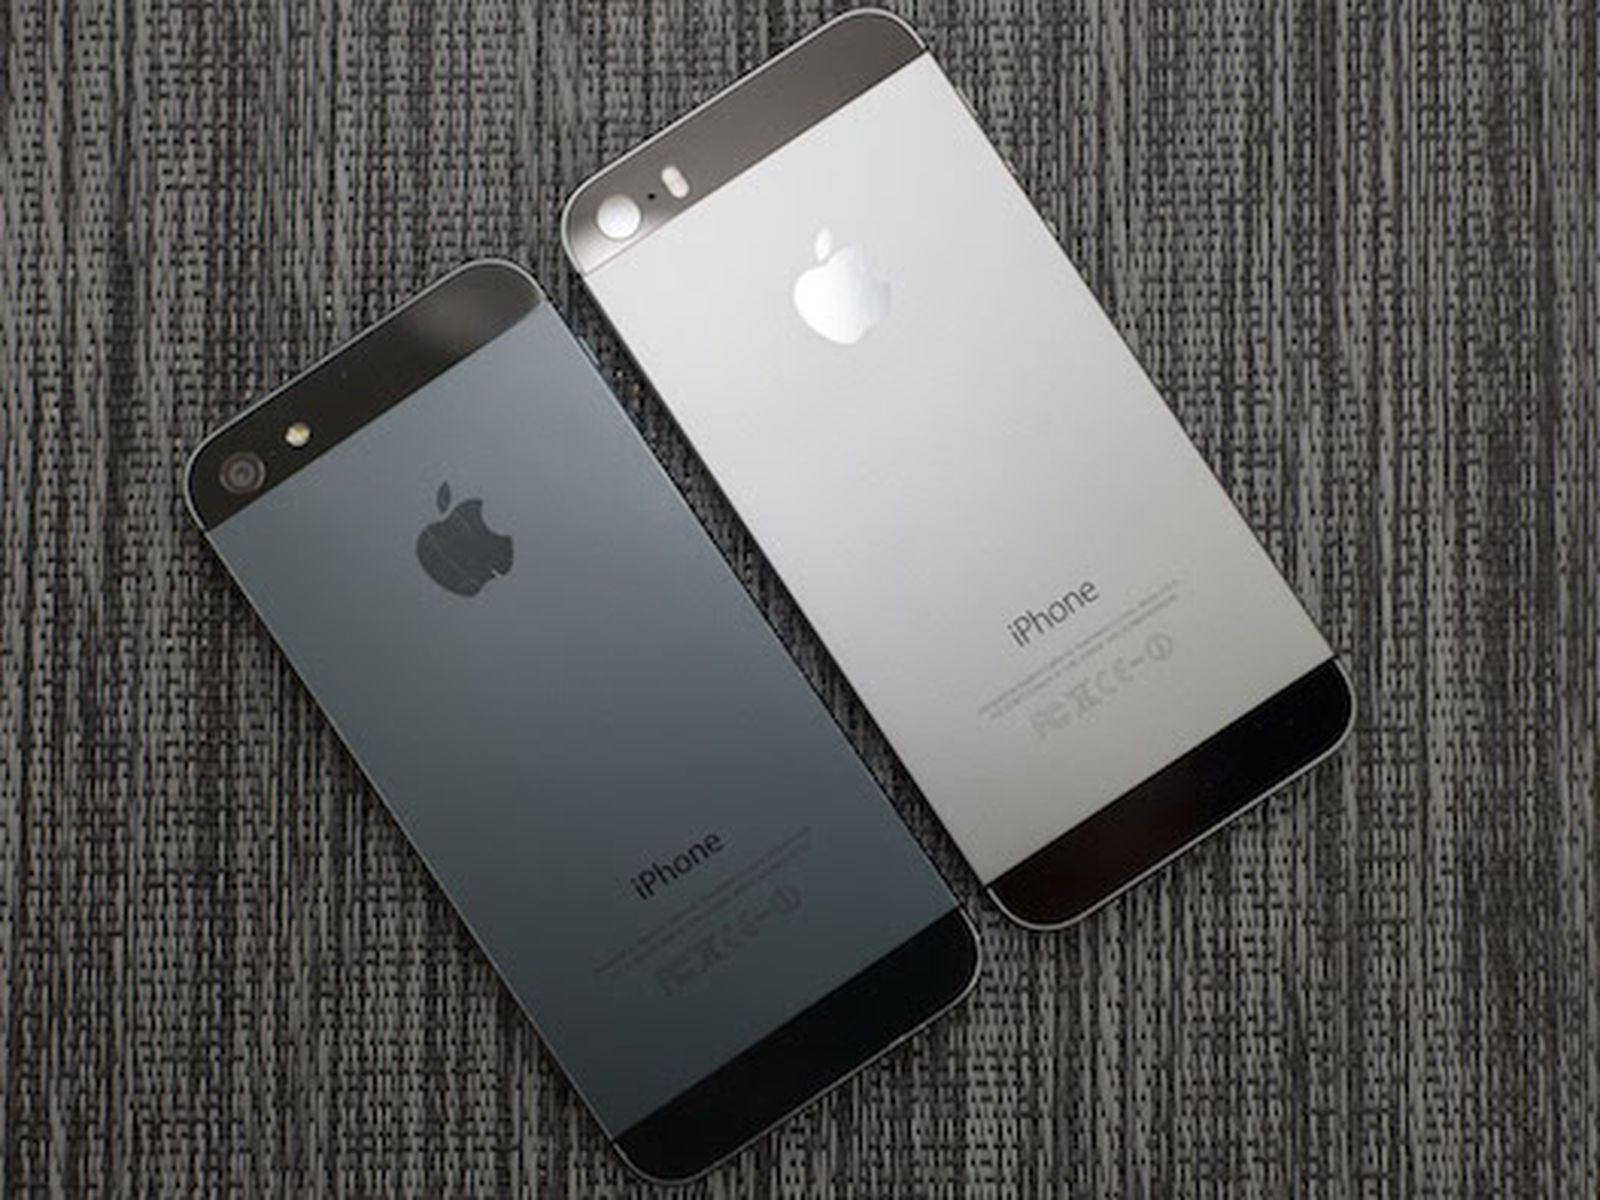 Rumored 'Deep Blue' iPhone 7 Said Actually Be Very Dark Space Gray - MacRumors